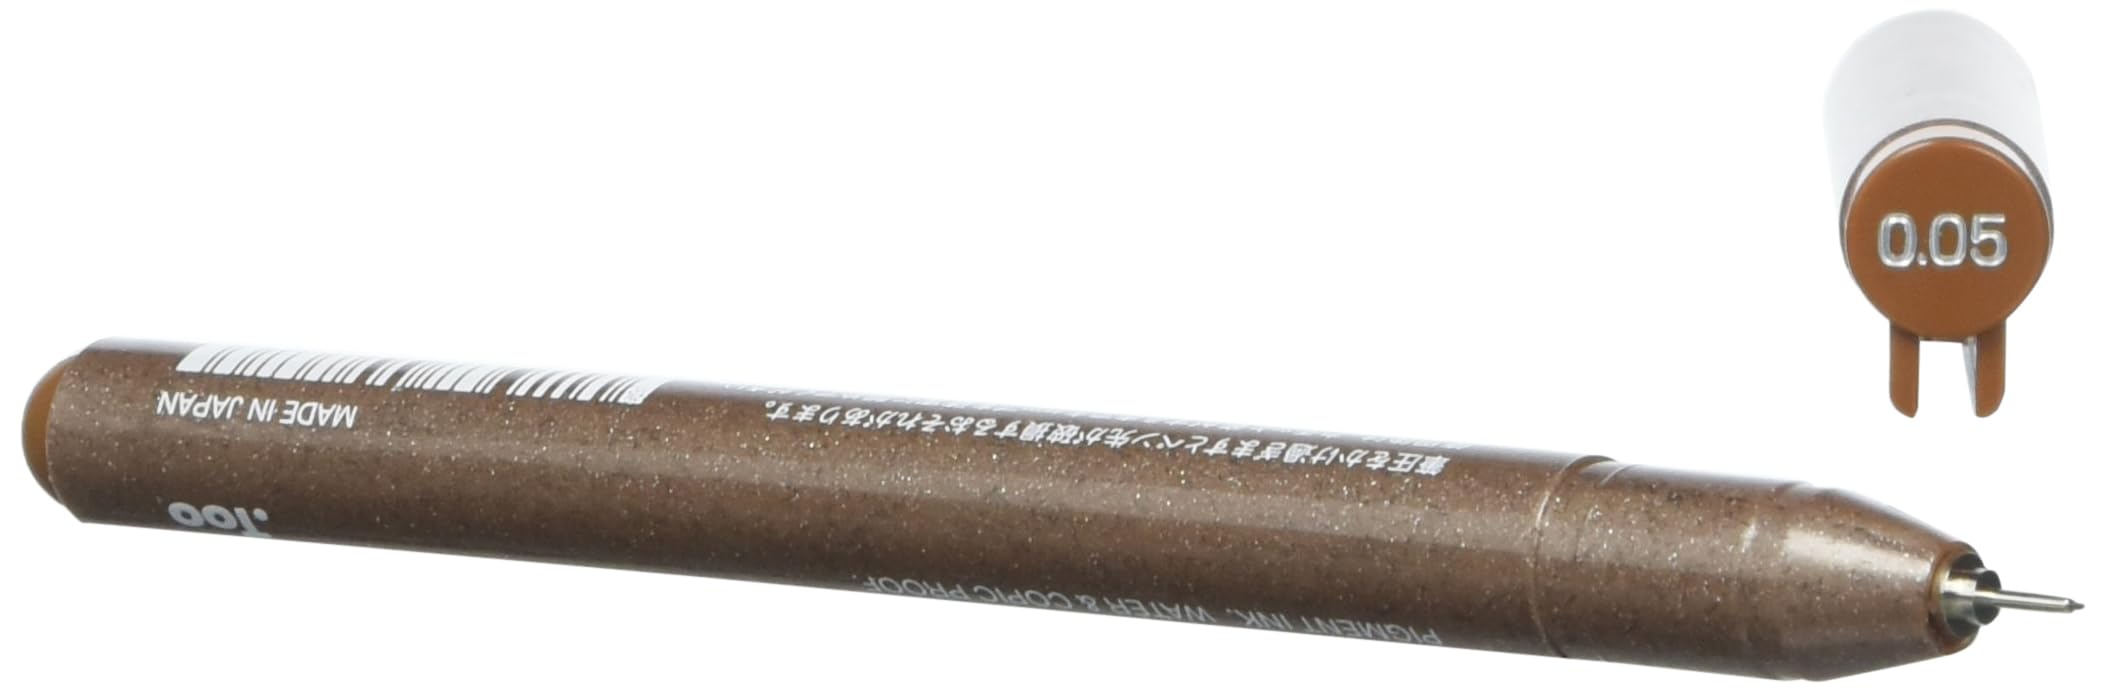 Copic Multiliner Sepia 0.05mm Fine Liner Precision Art Pen